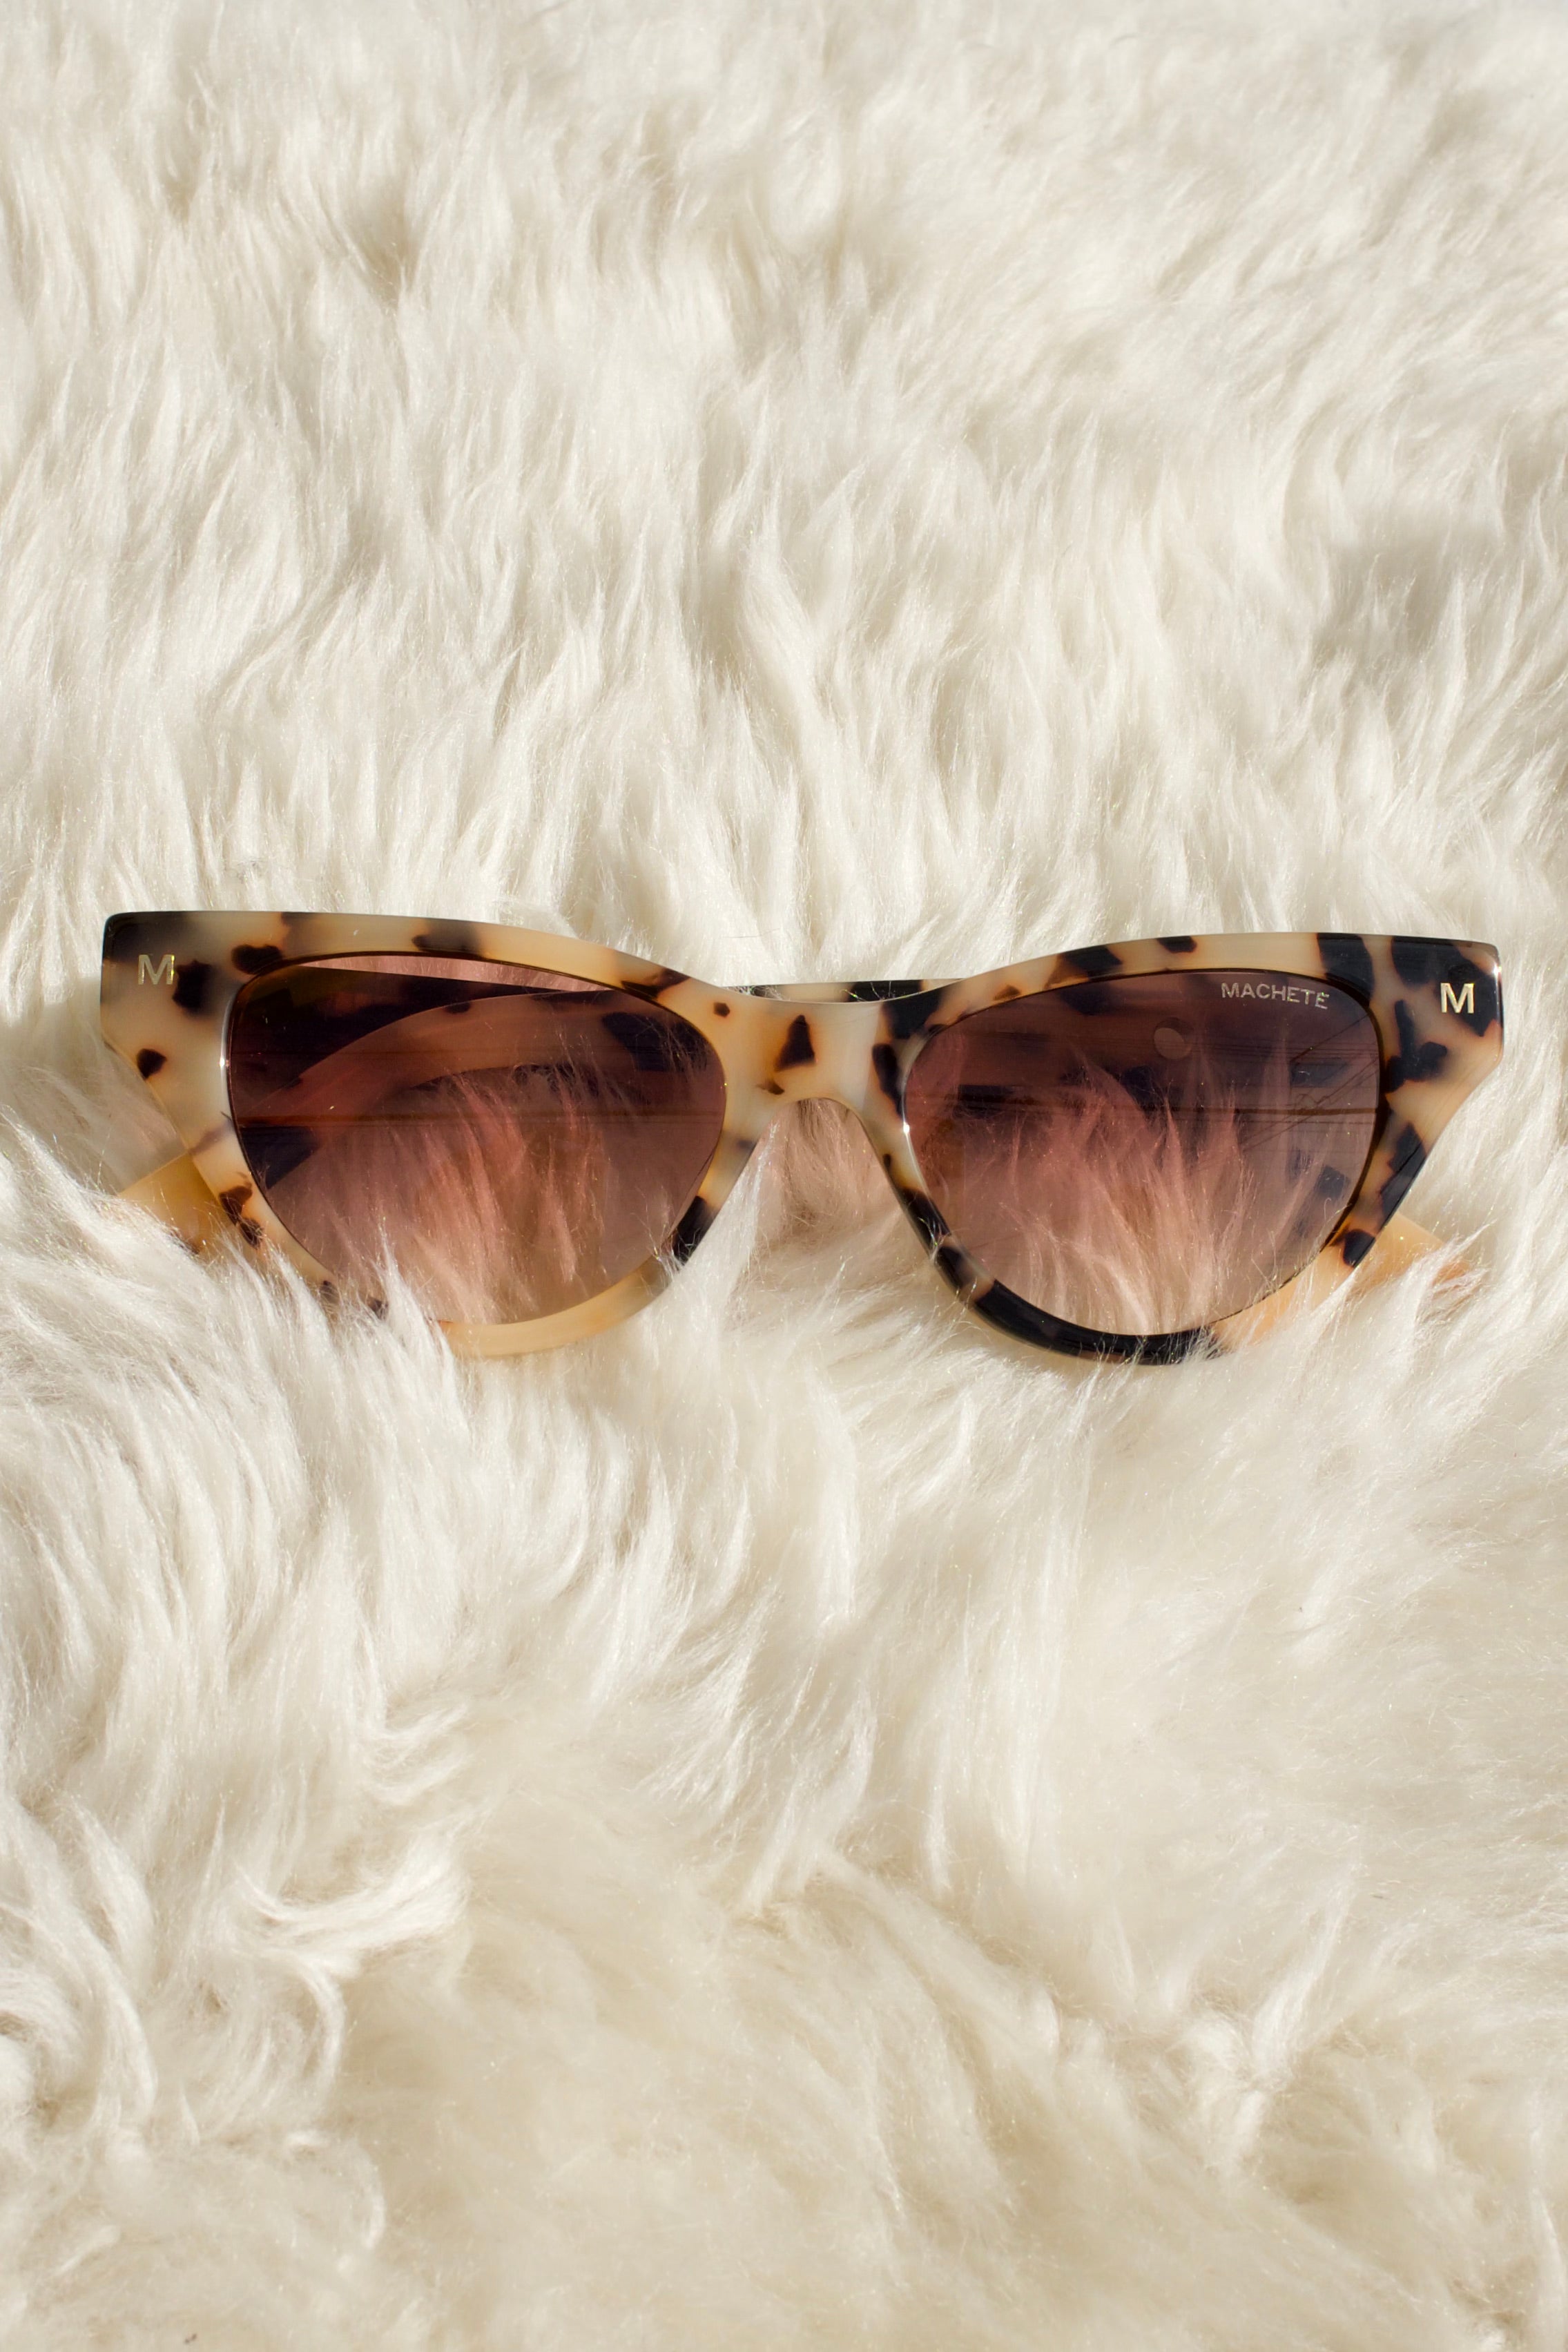 Machete Suzy Sunglasses